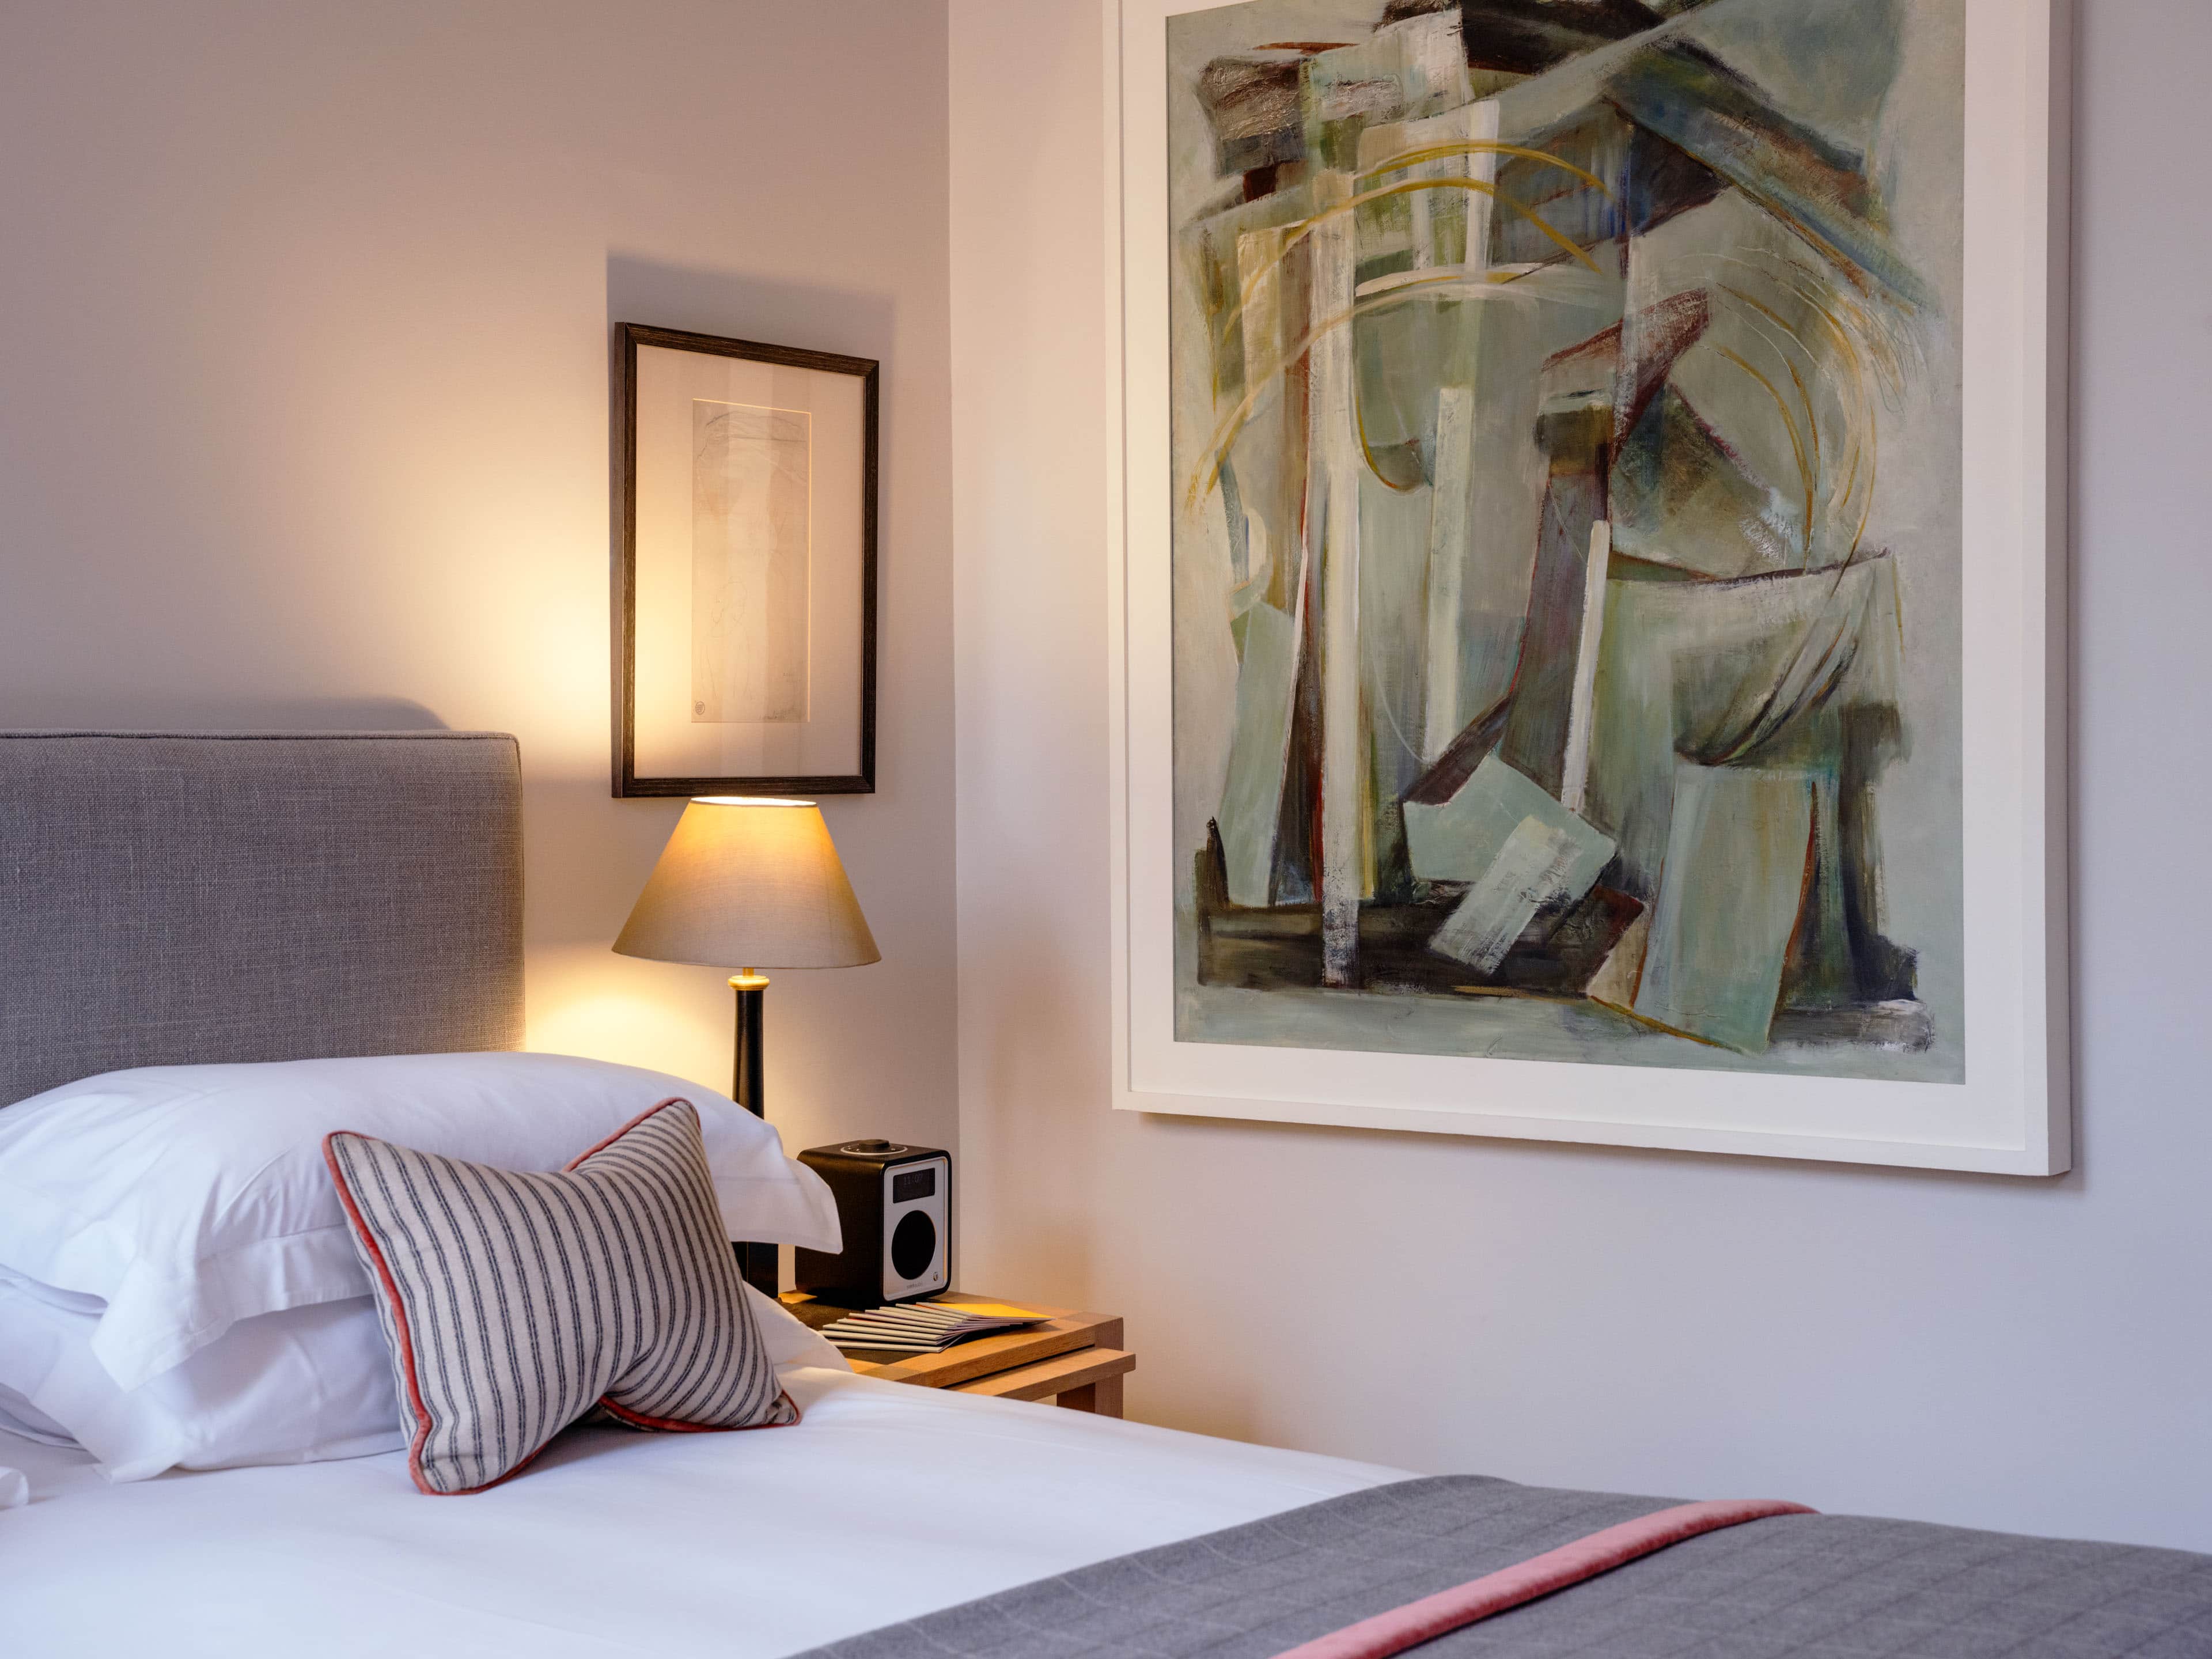 0002 - 2021 - Old Bank Hotel - Oxford - High res - Bedroom Art - Web Hero